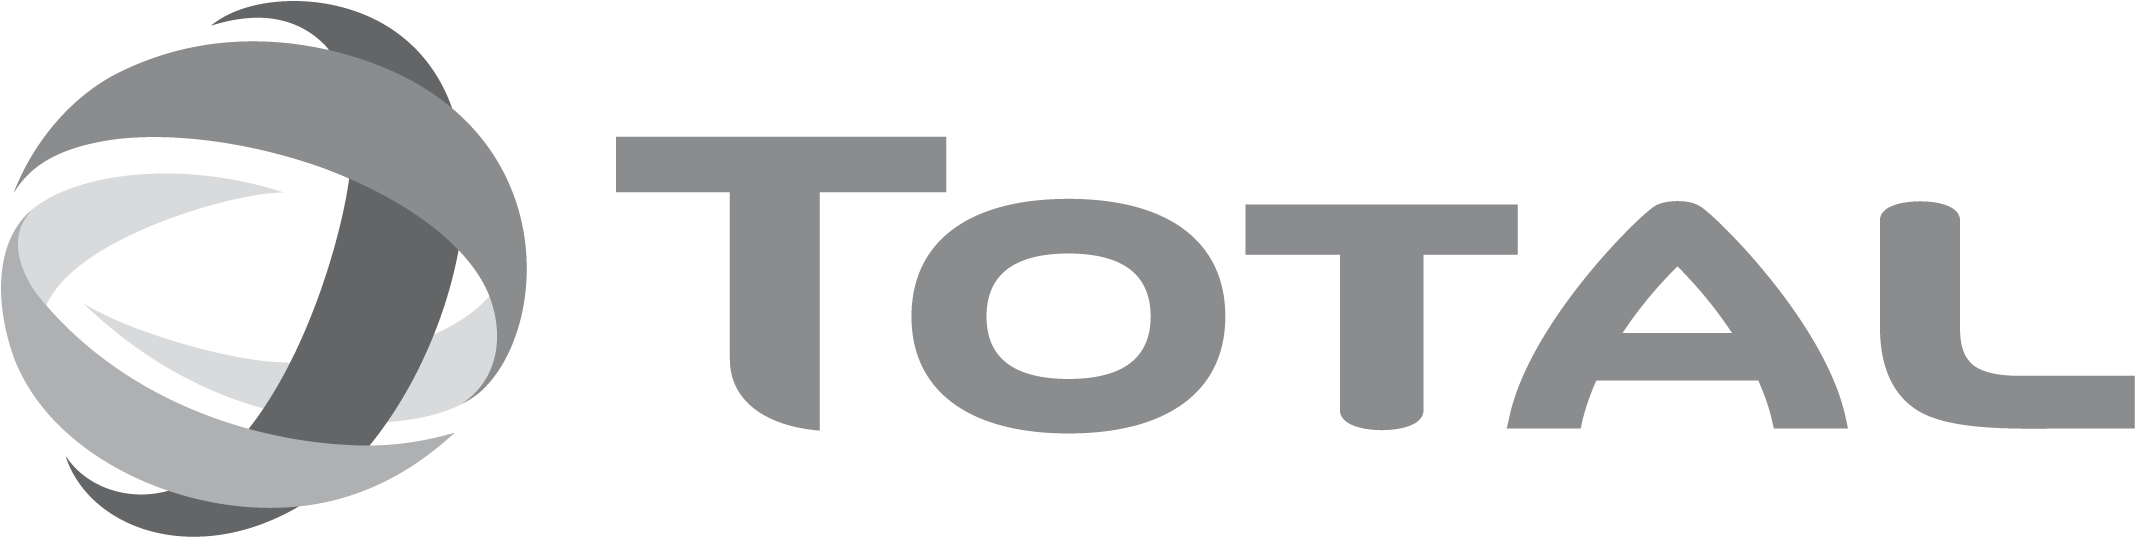 Total company. Тотал логотип. Логотип Тоталь. Тотал масло логотип. Тотал Энерджи логотип.